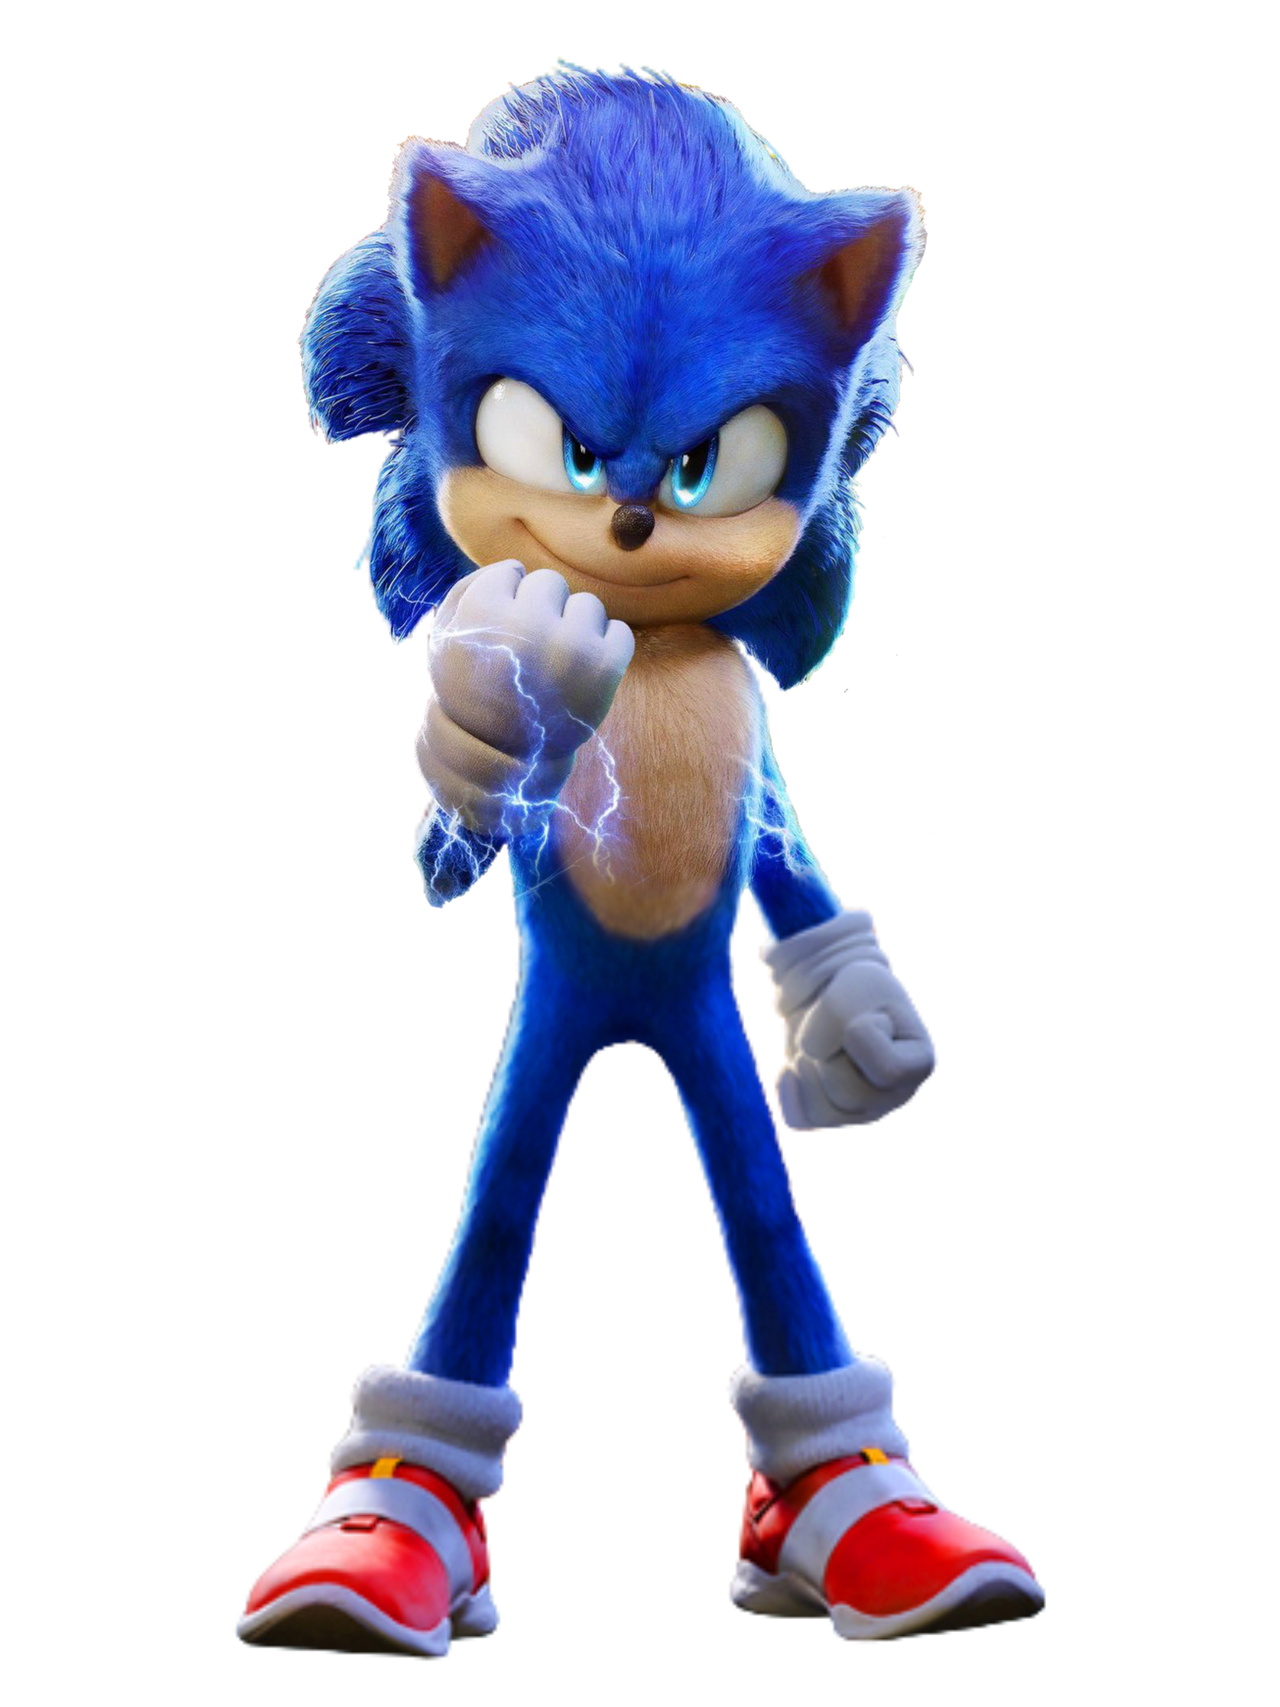 Sonic The Hedgehog 2 Render by Danic574 on DeviantArt